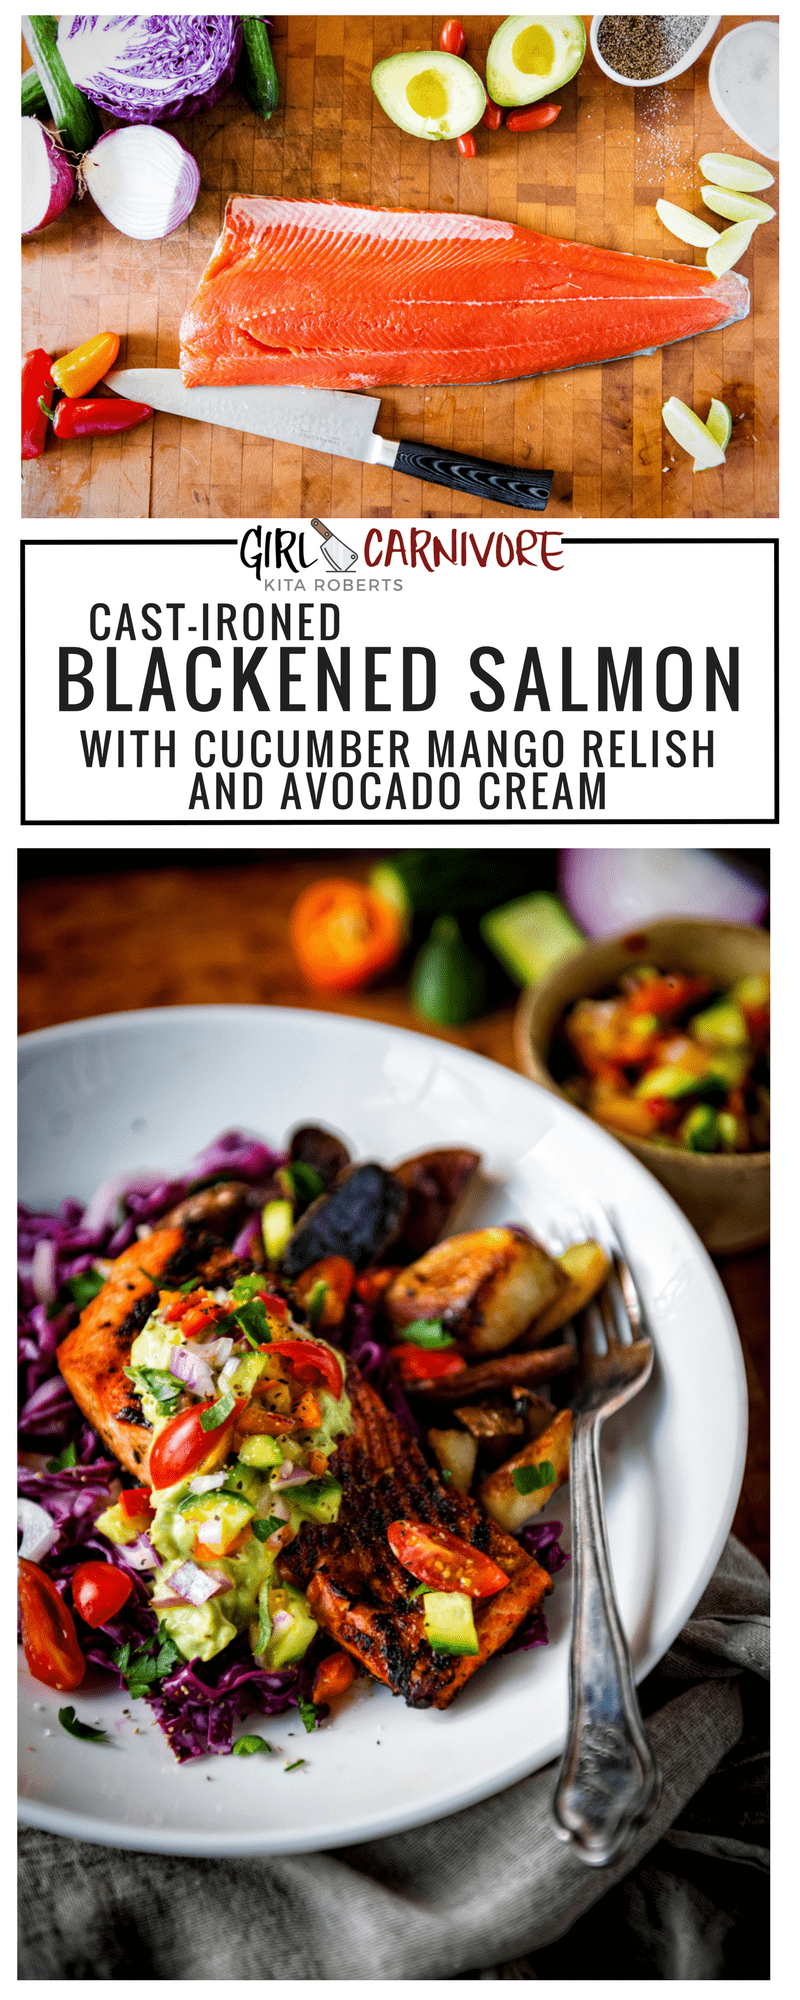 Cast-Ironed Blackened Salmon with Cucumber Mango Relish and Avocado Cream | GirlCarnivore Recipe